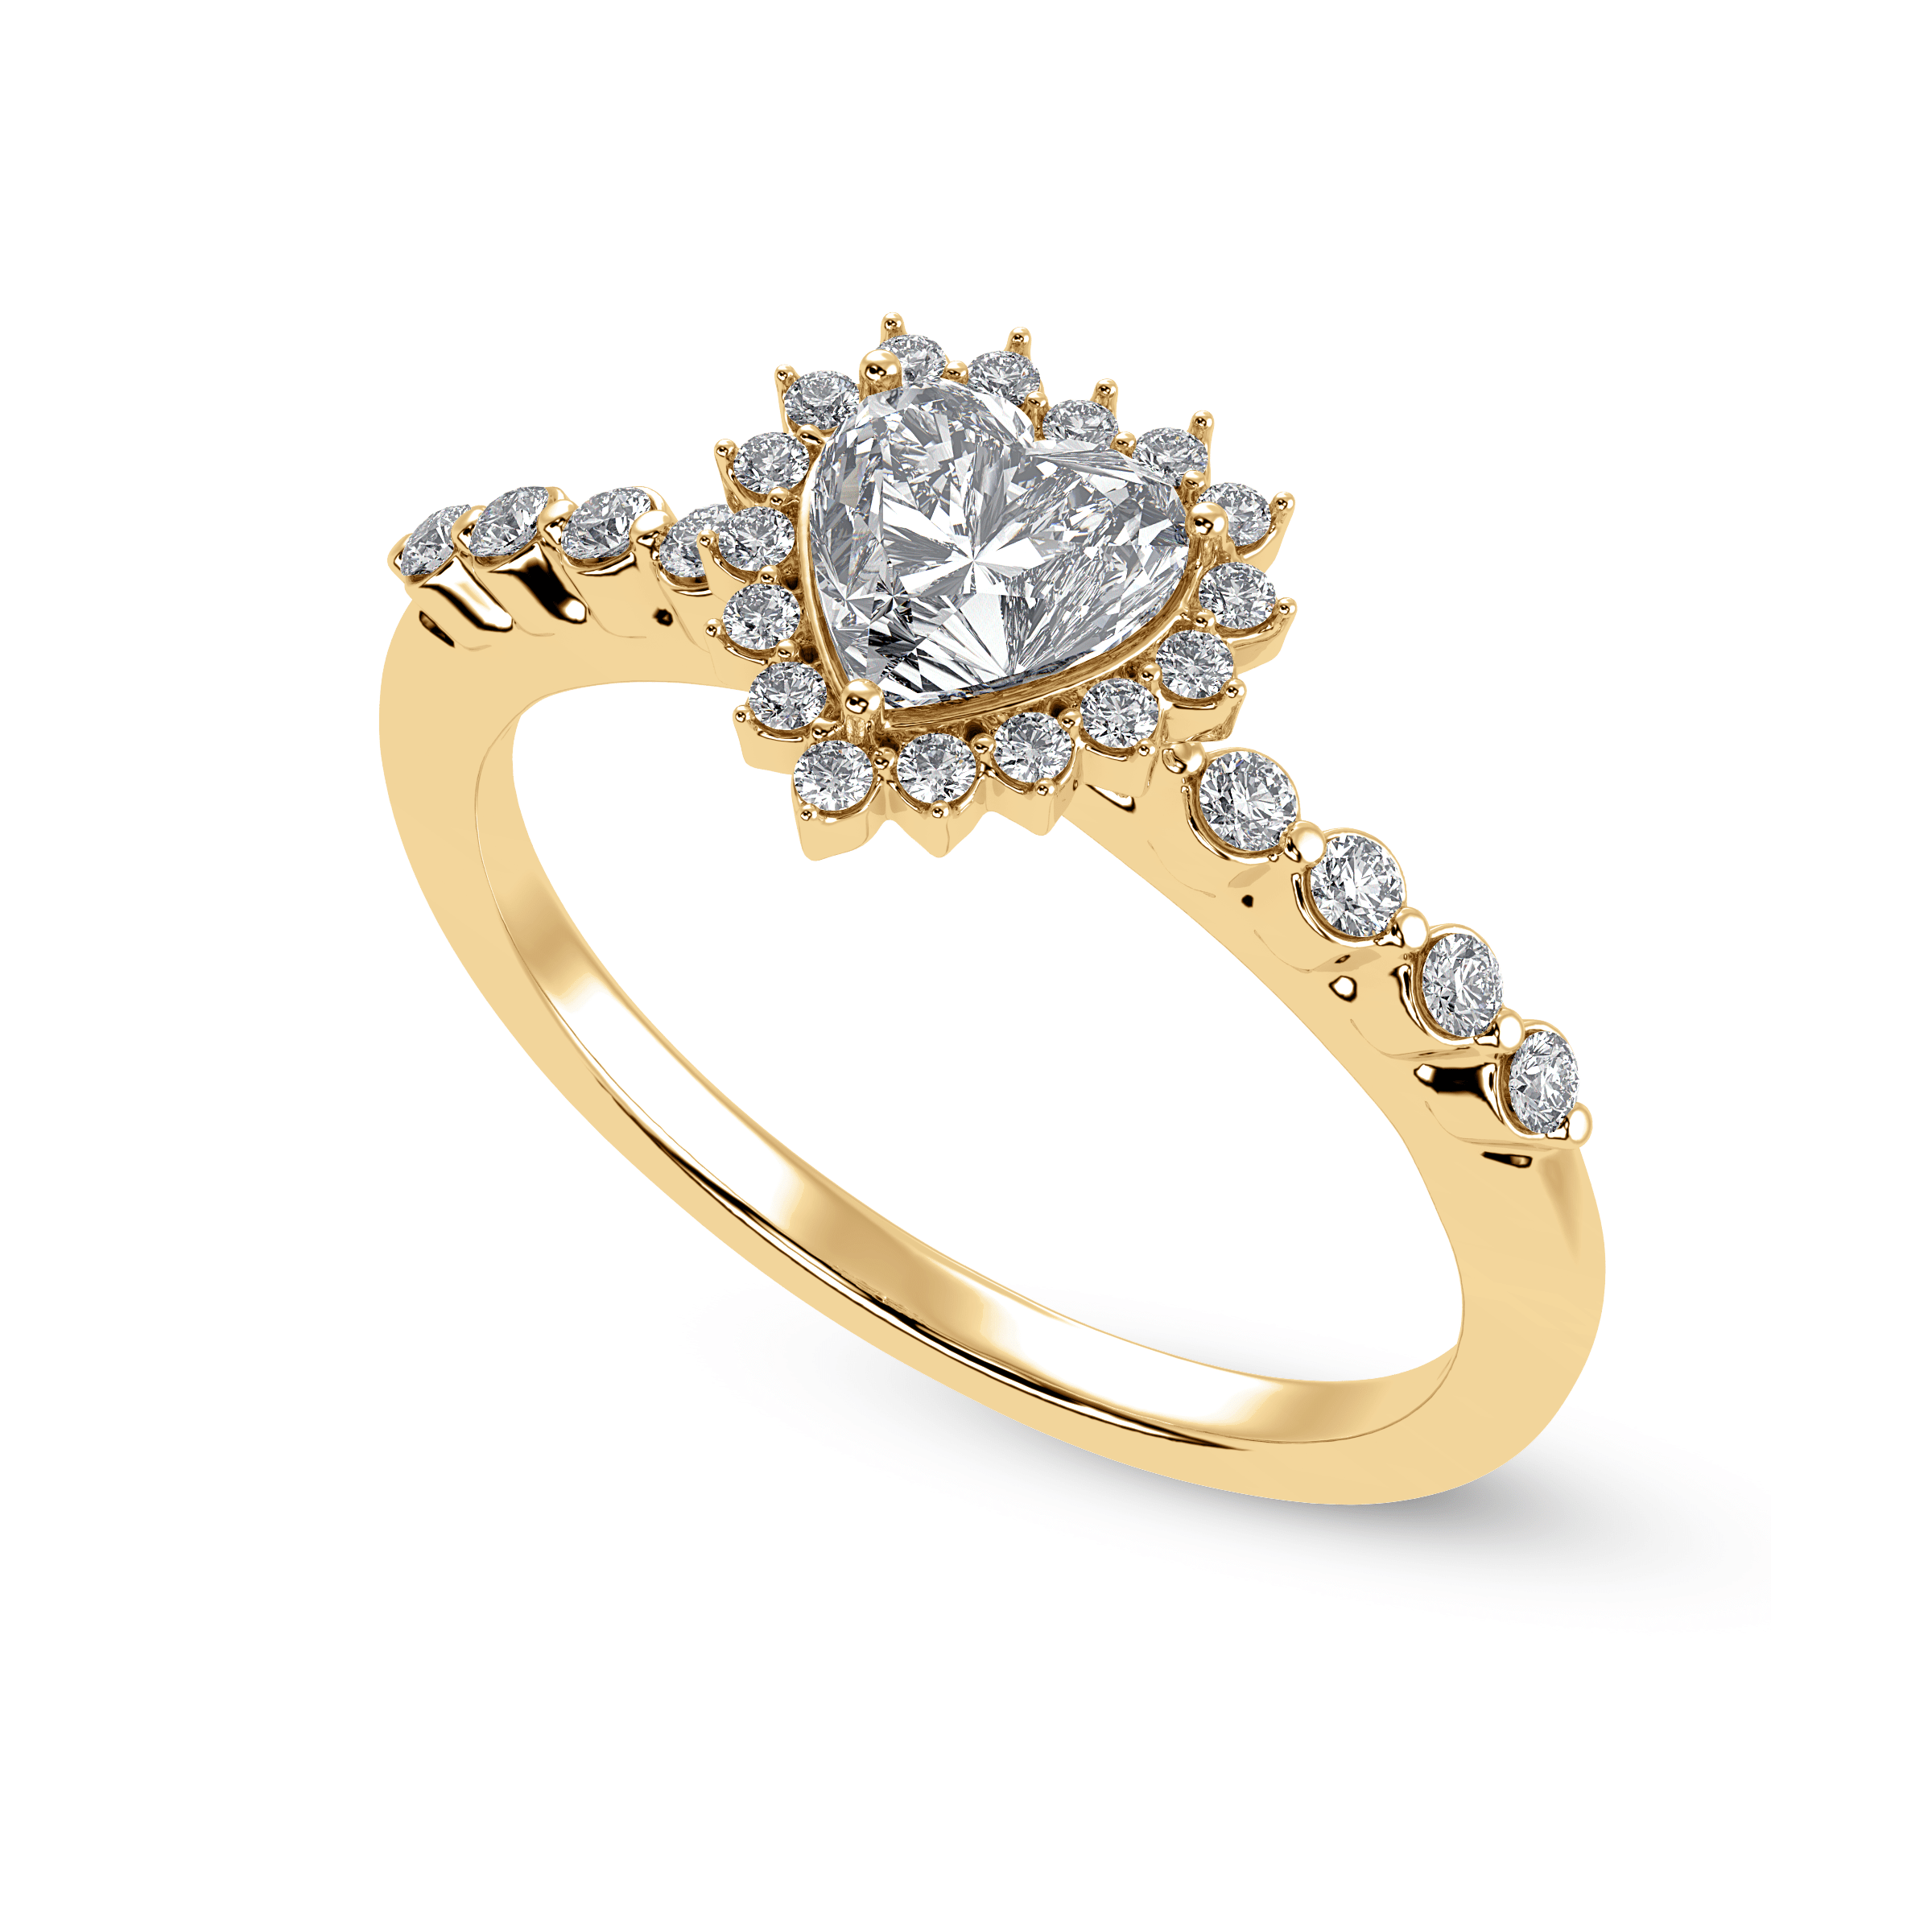 Yellow Diamond Engagement Rings | Fancy Coloured Diamonds